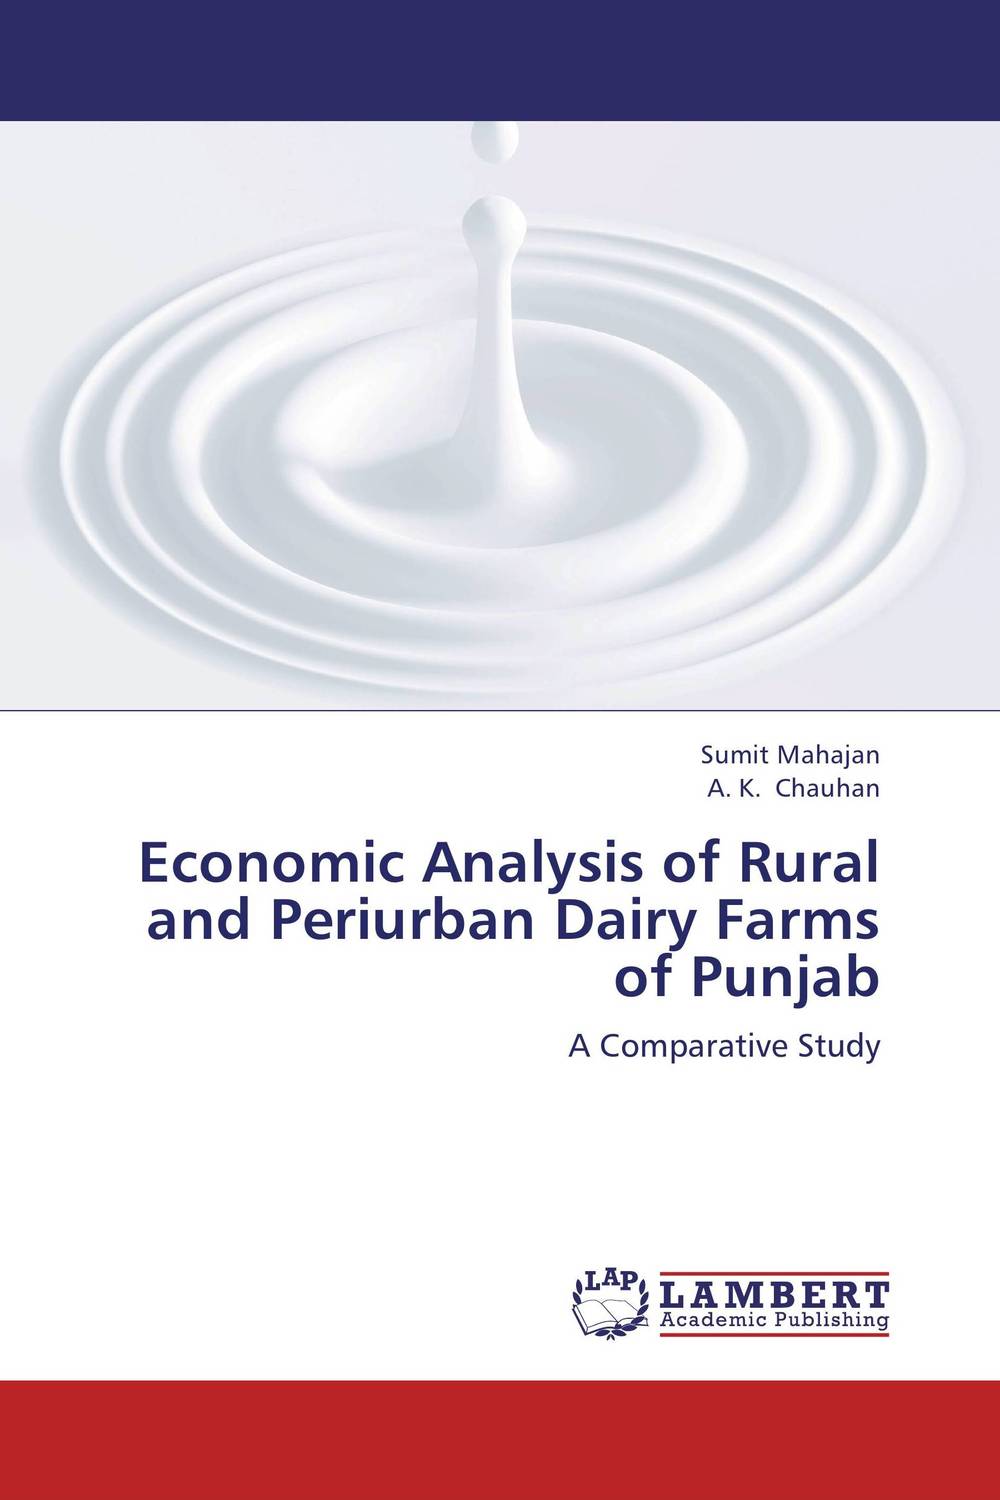 Economic Analysis of Rural and Periurban Dairy Farms of Punjab